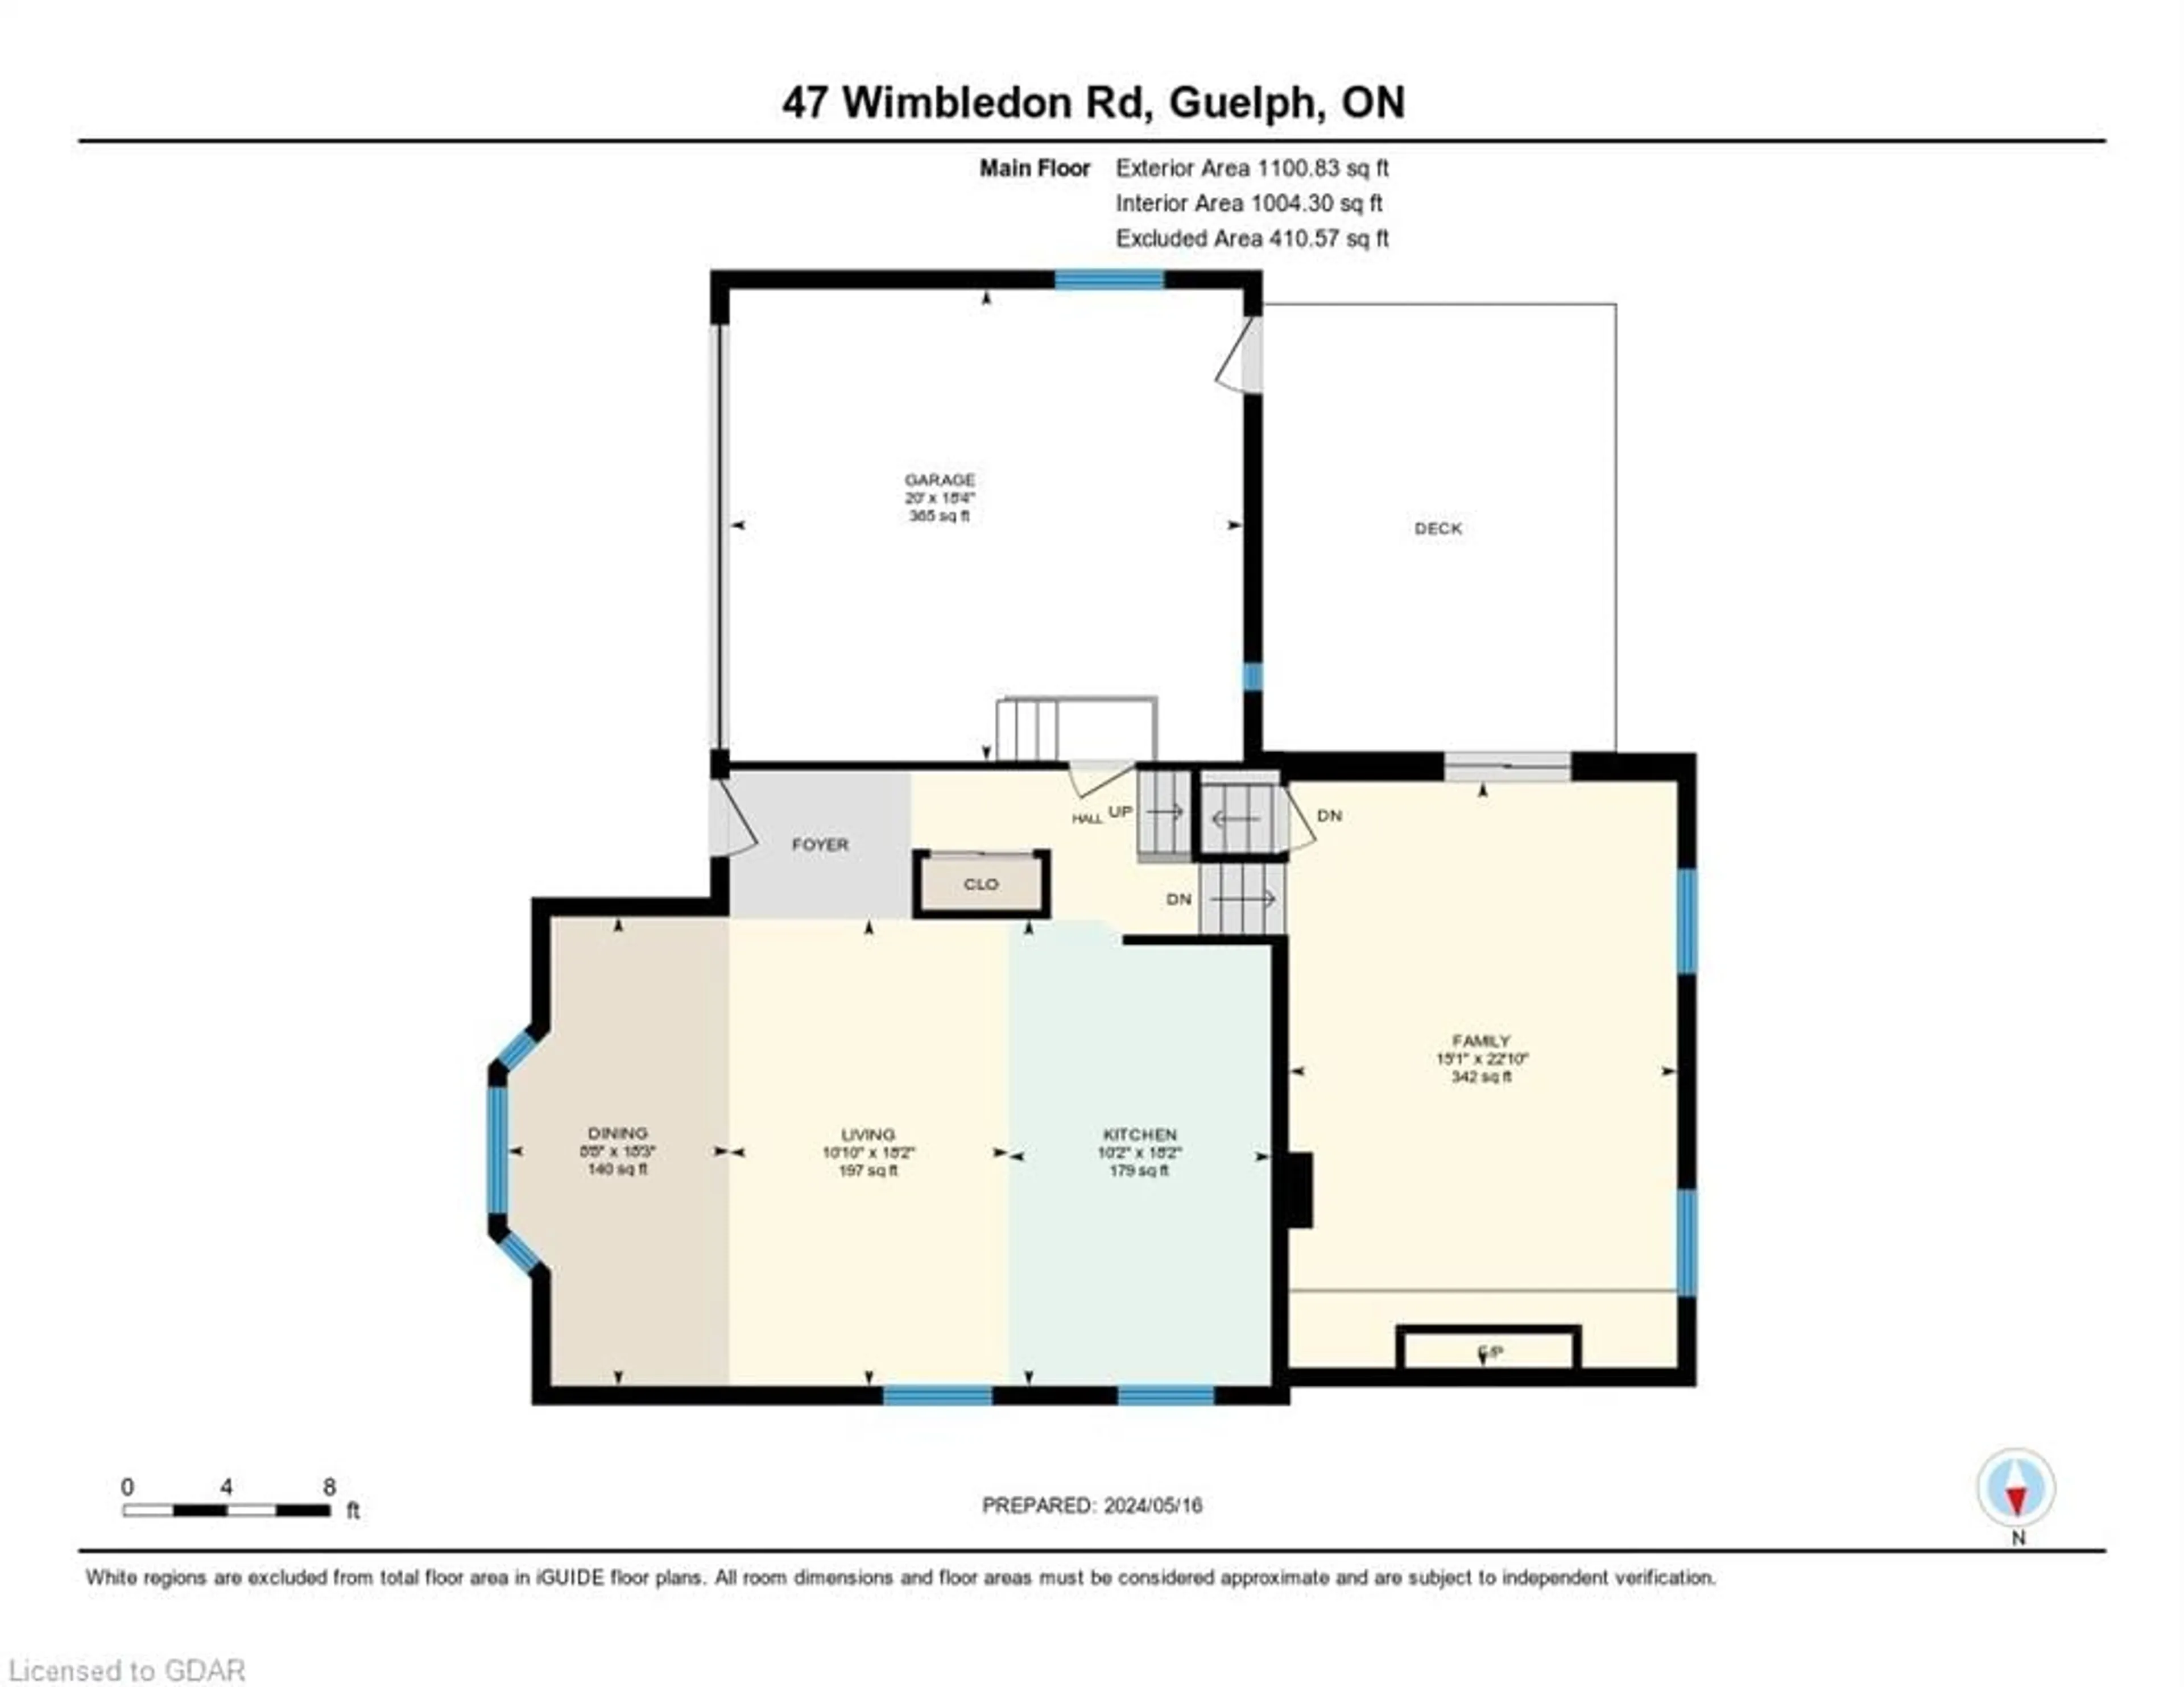 Floor plan for 47 Wimbledon Rd, Guelph Ontario N1H 7R6